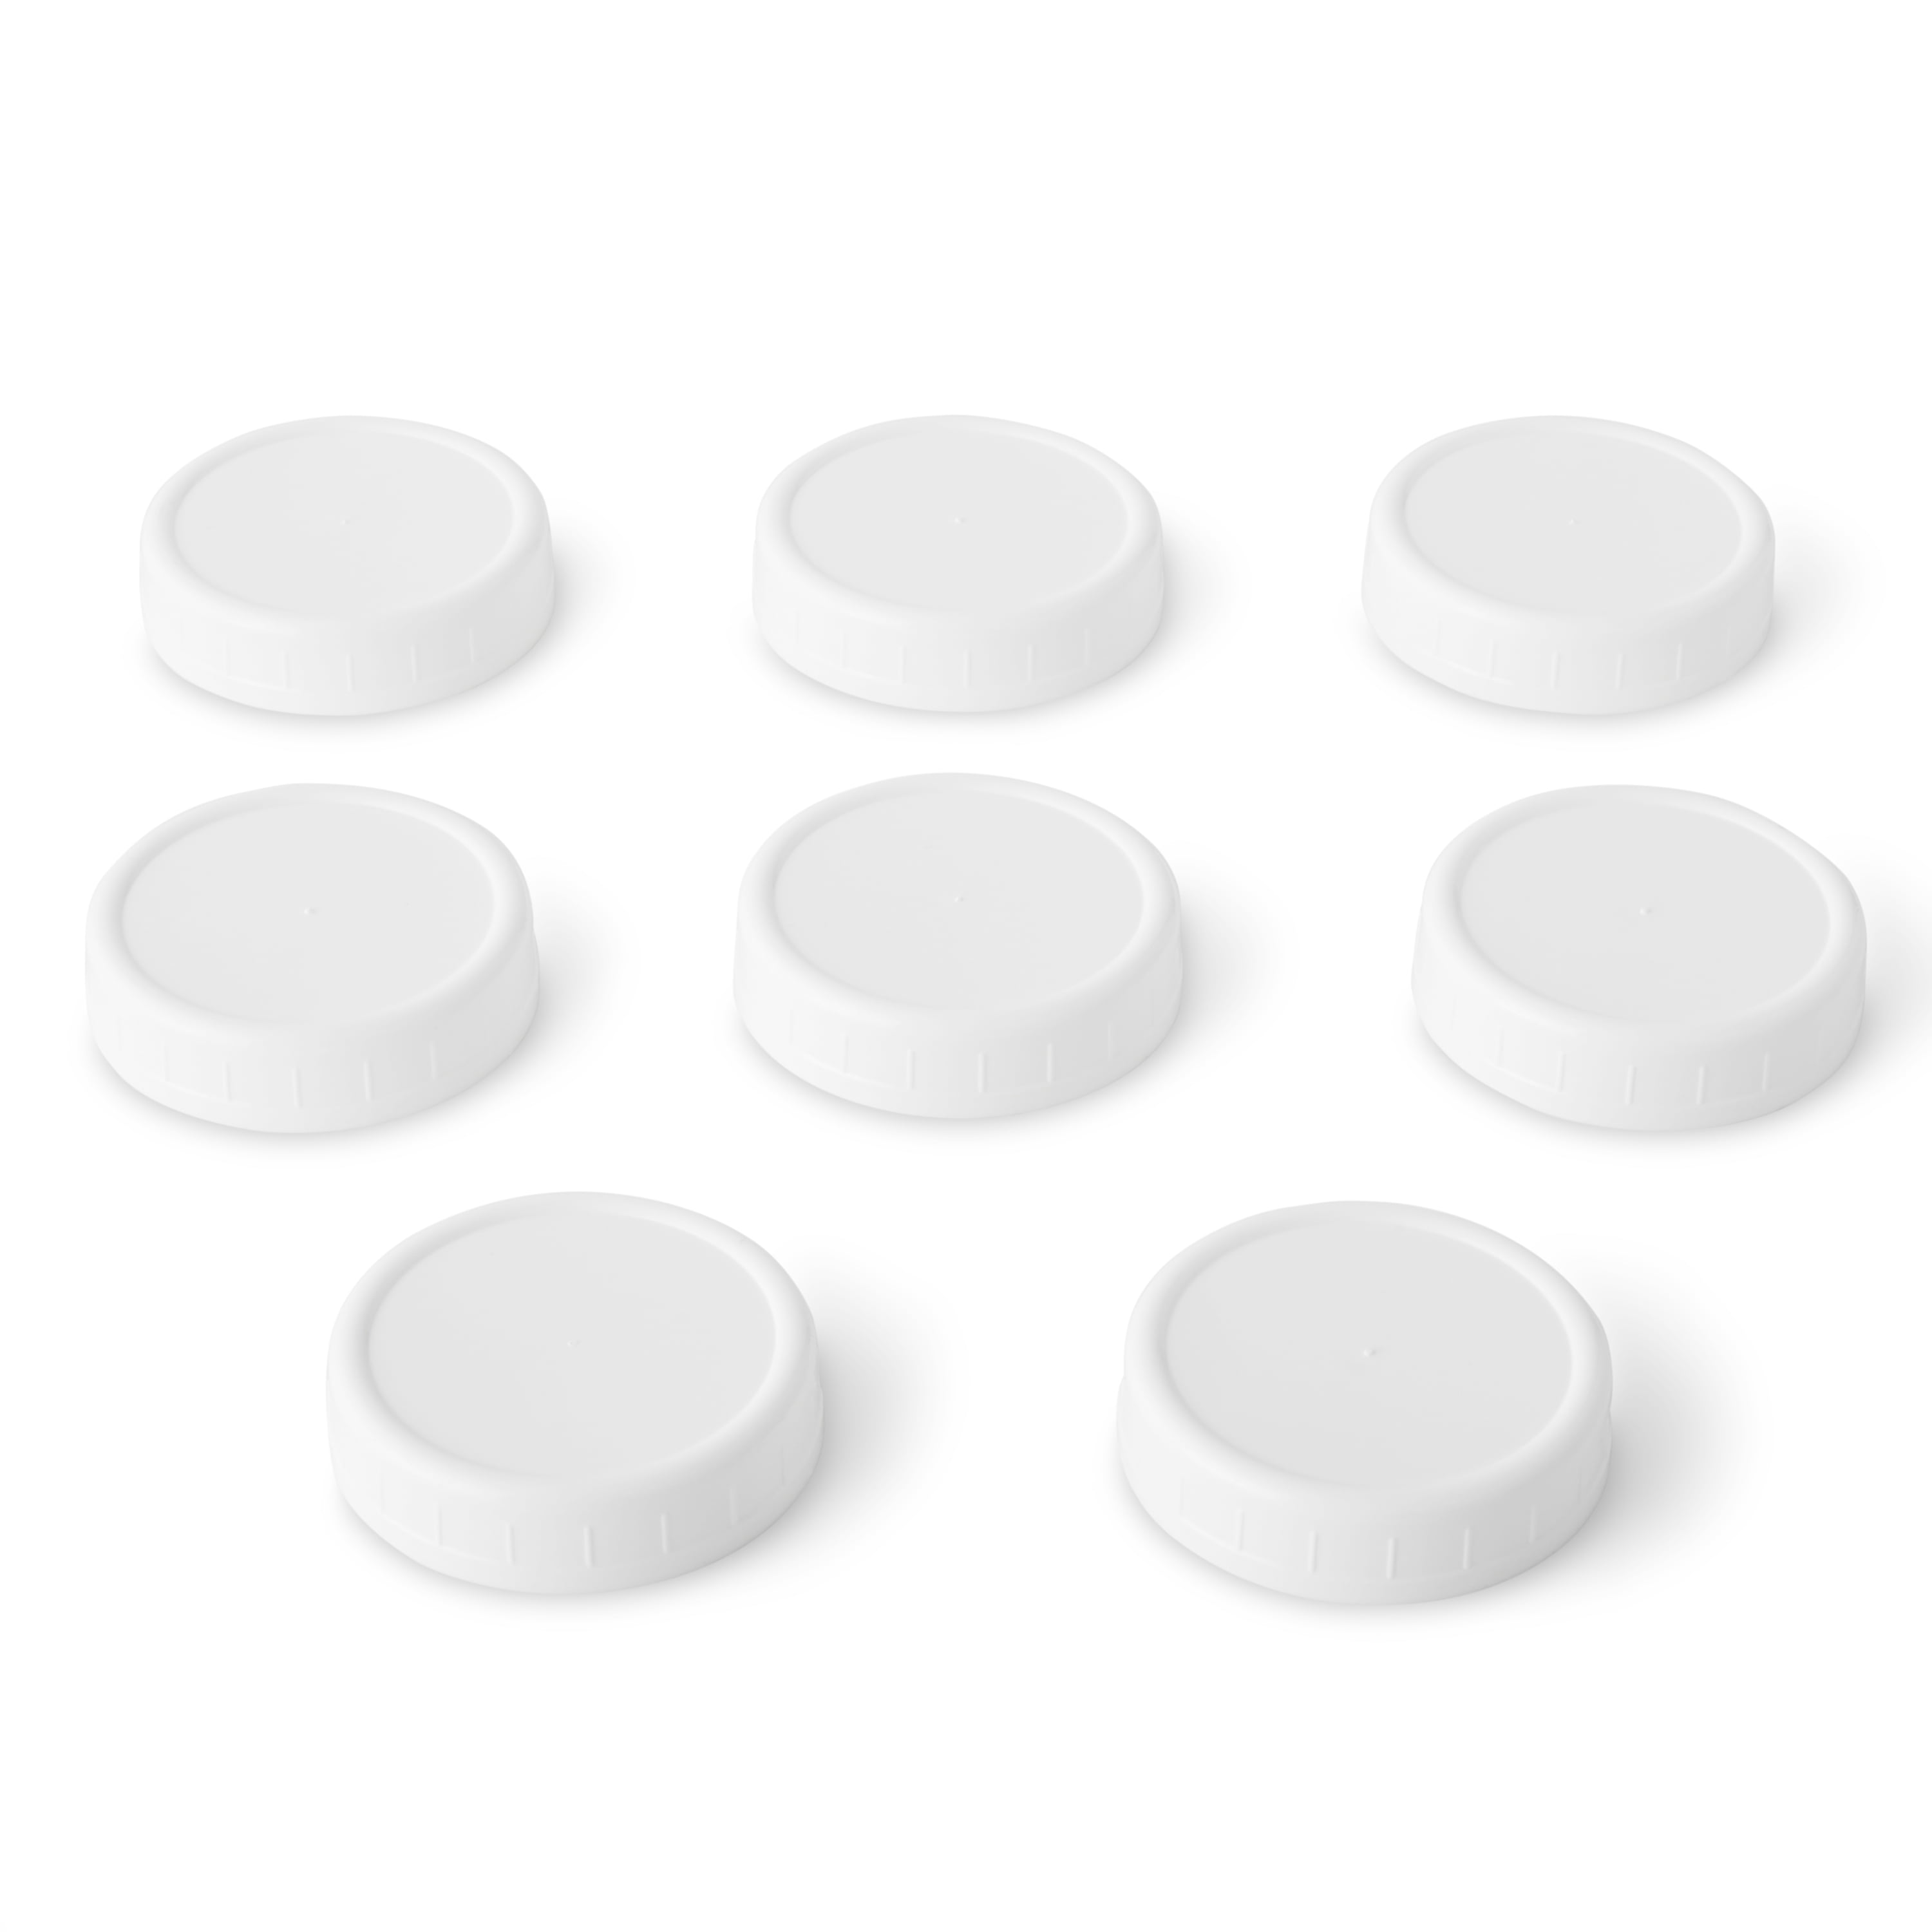 Mainstays Pack of 8 BPA-Free Plastic Regular Mouth Canning Jar Lids, White